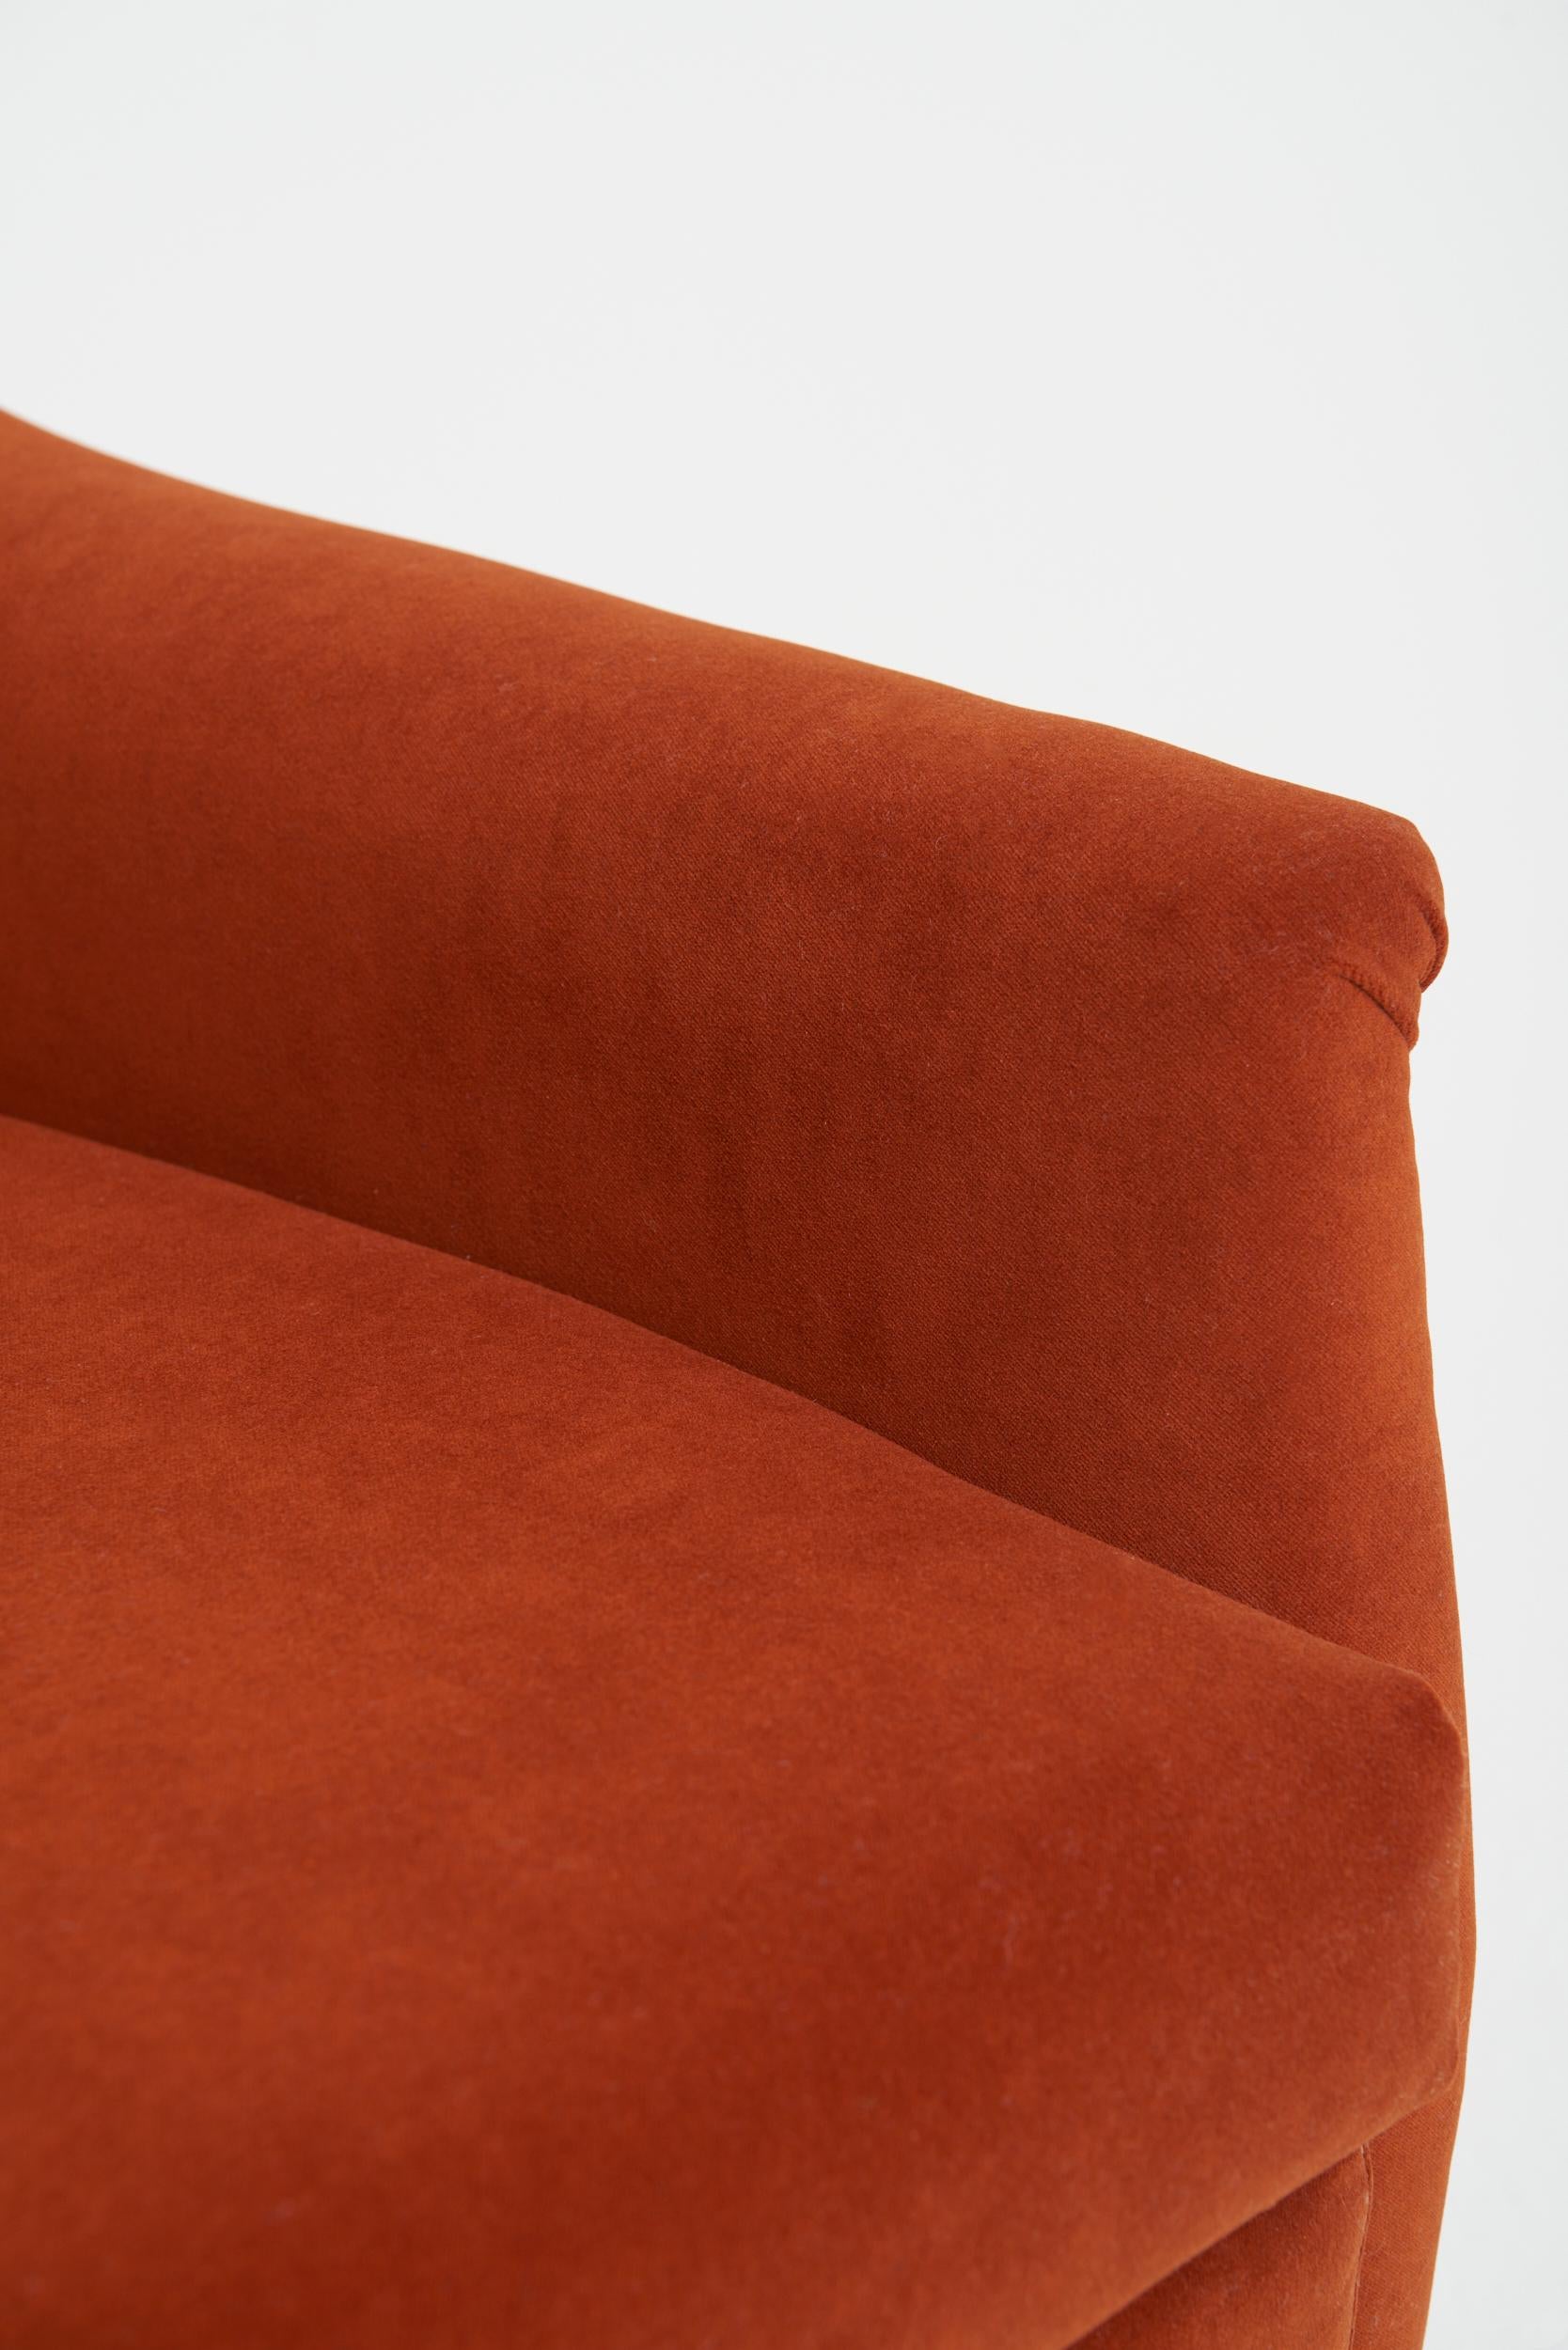 Mid-Century Swedish Sofa For Sale 4